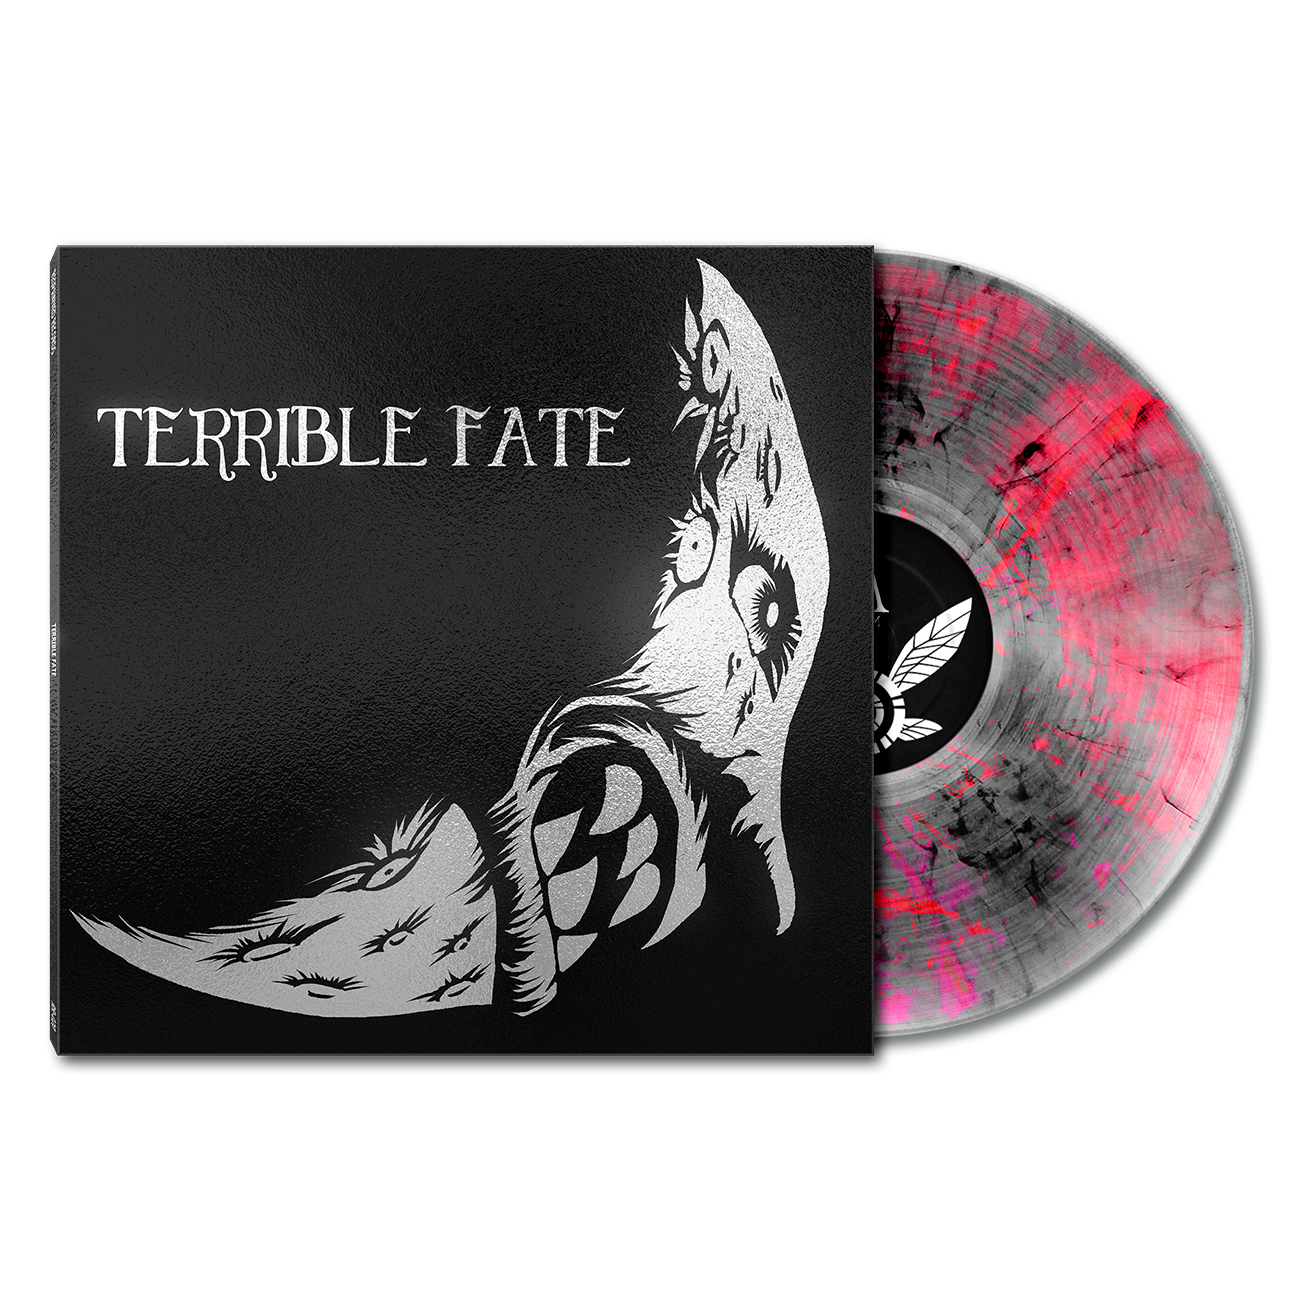 Terrible Fate (Majora's Mask Tribute) Vinyl Record